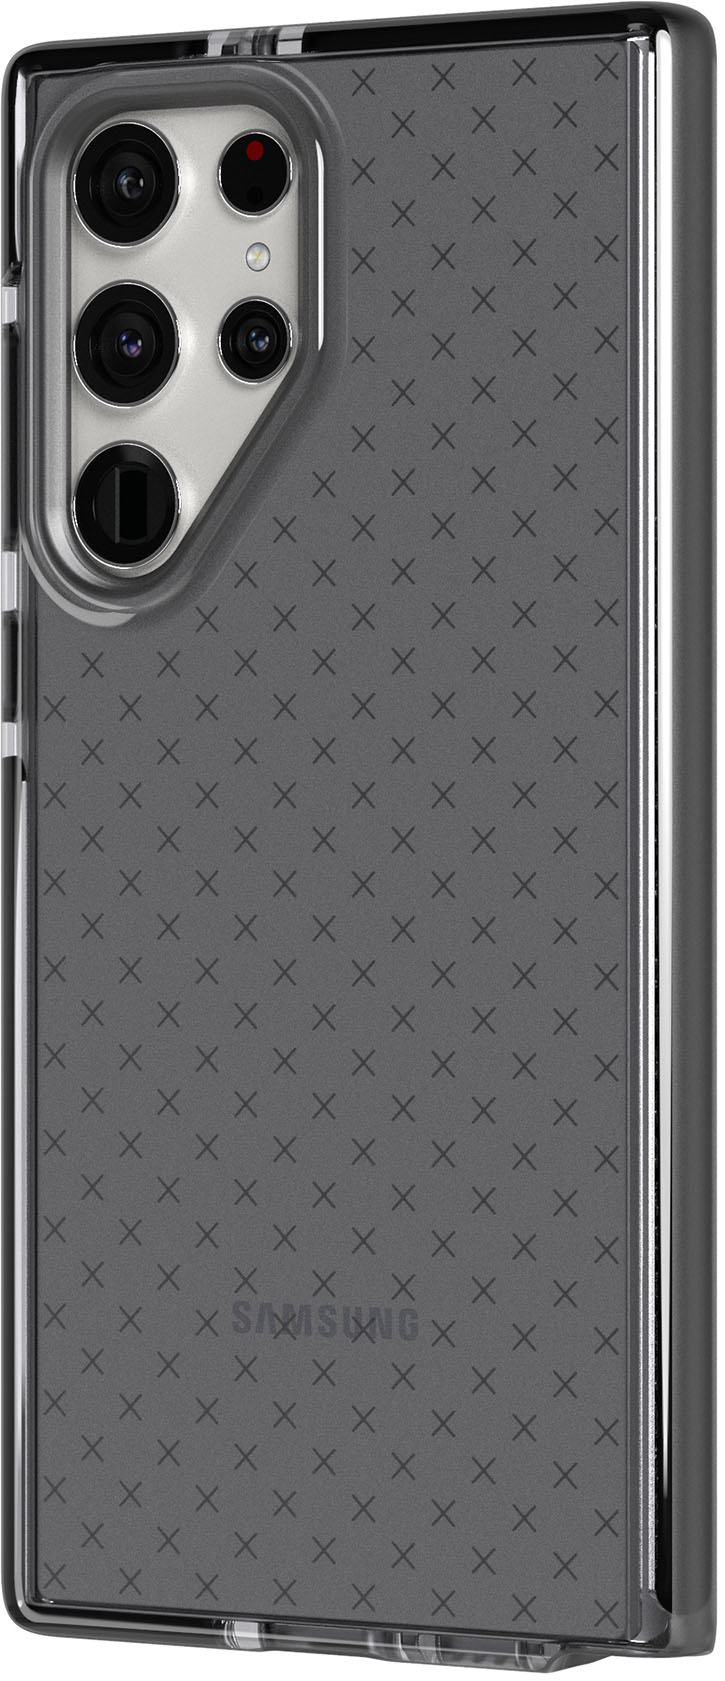 Evo Check - Samsung Galaxy S23 Ultra Case - Smokey/Black